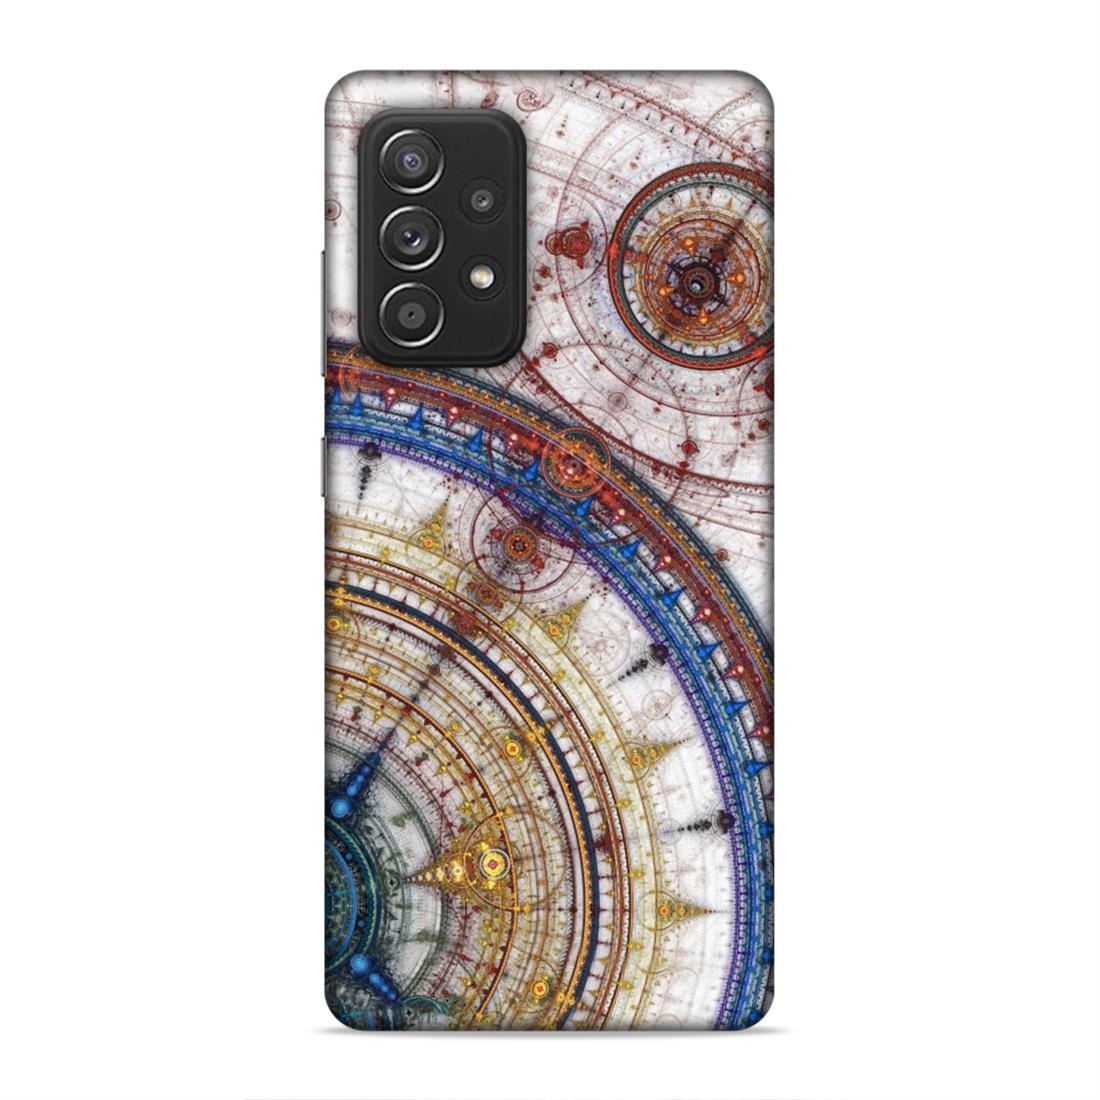 Geometric Art Hard Back Case For Samsung Galaxy A52 / A52s 5G